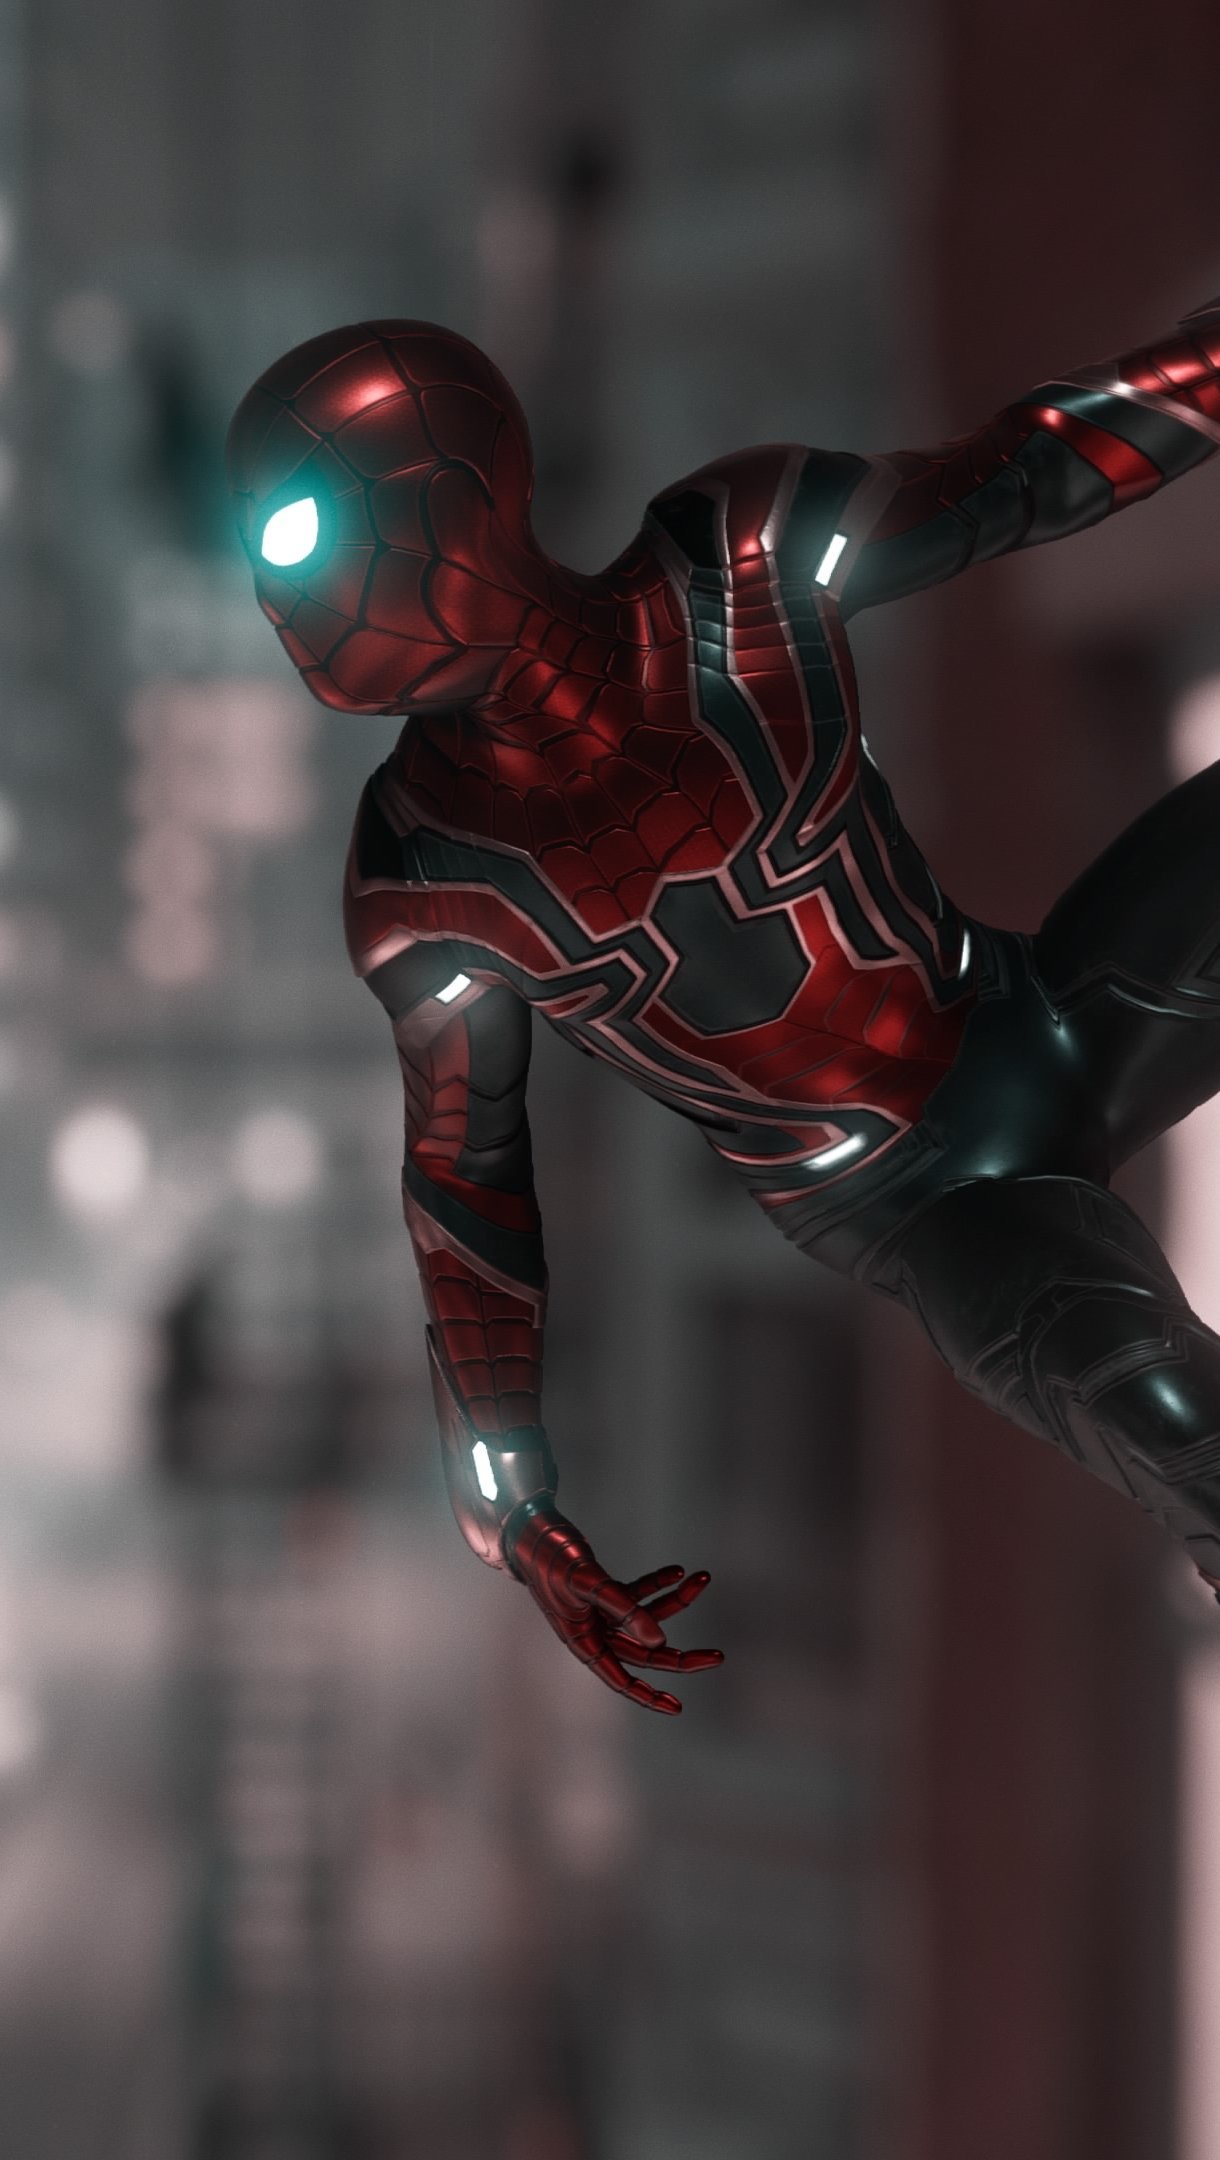 Spiderman in the city Wallpaper 4k Ultra HD ID:4875